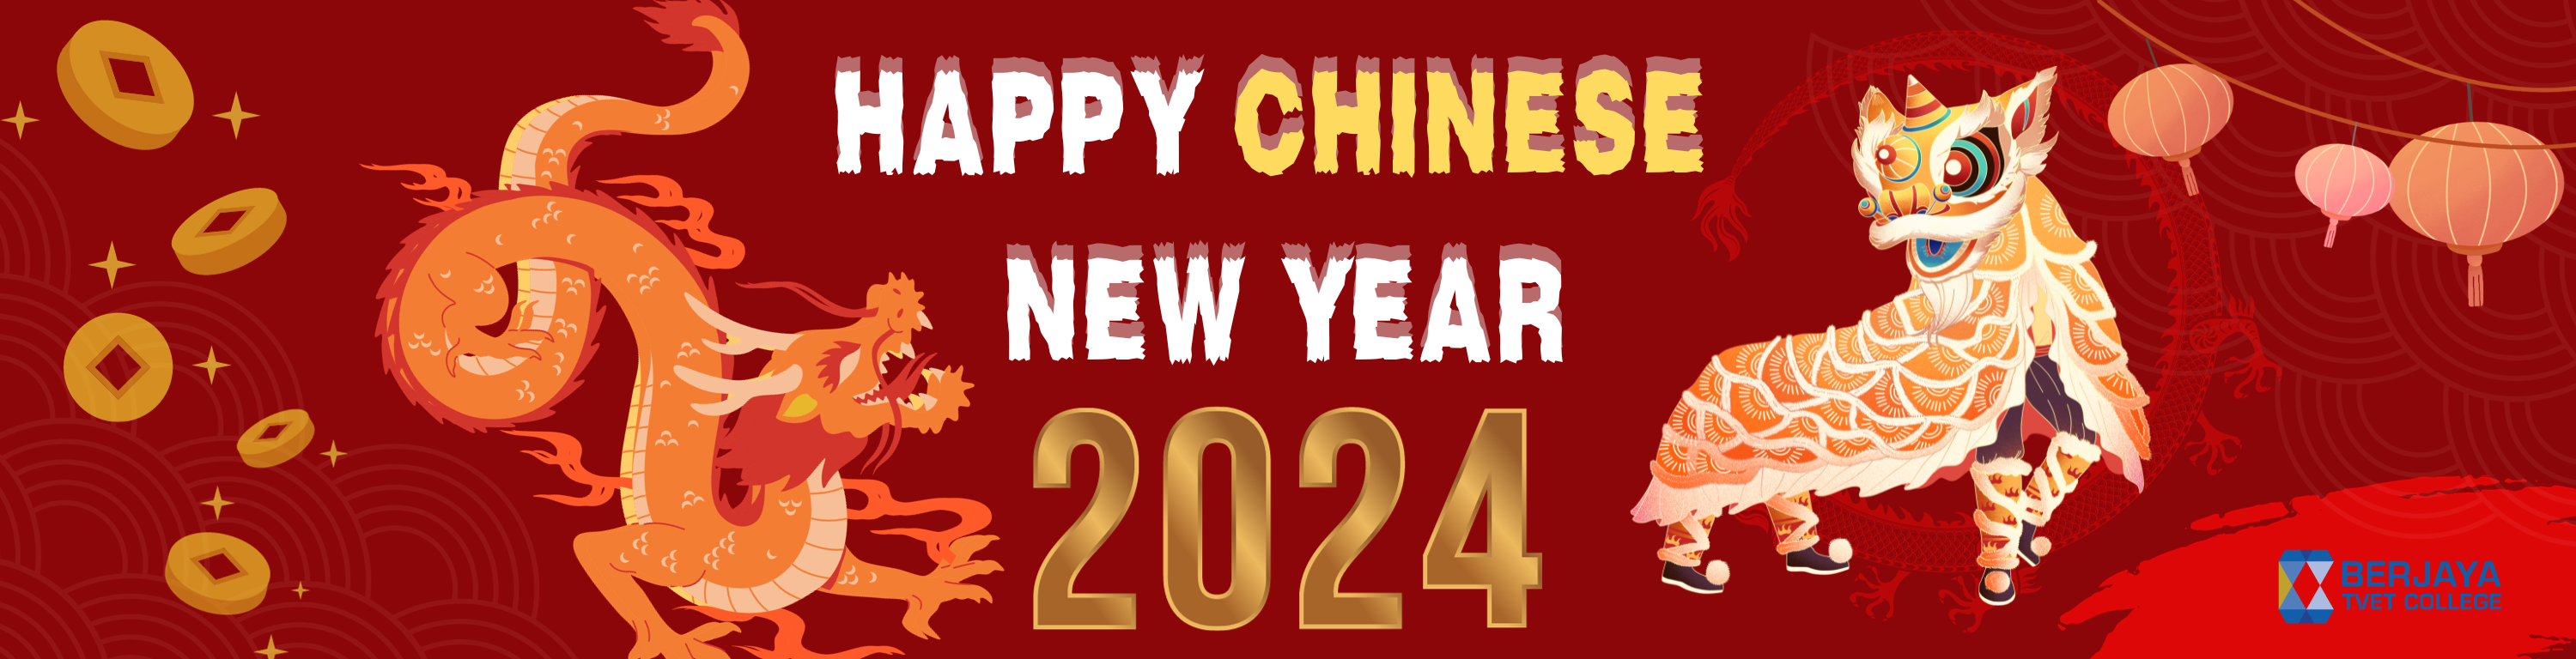 Home_Chinese New Year